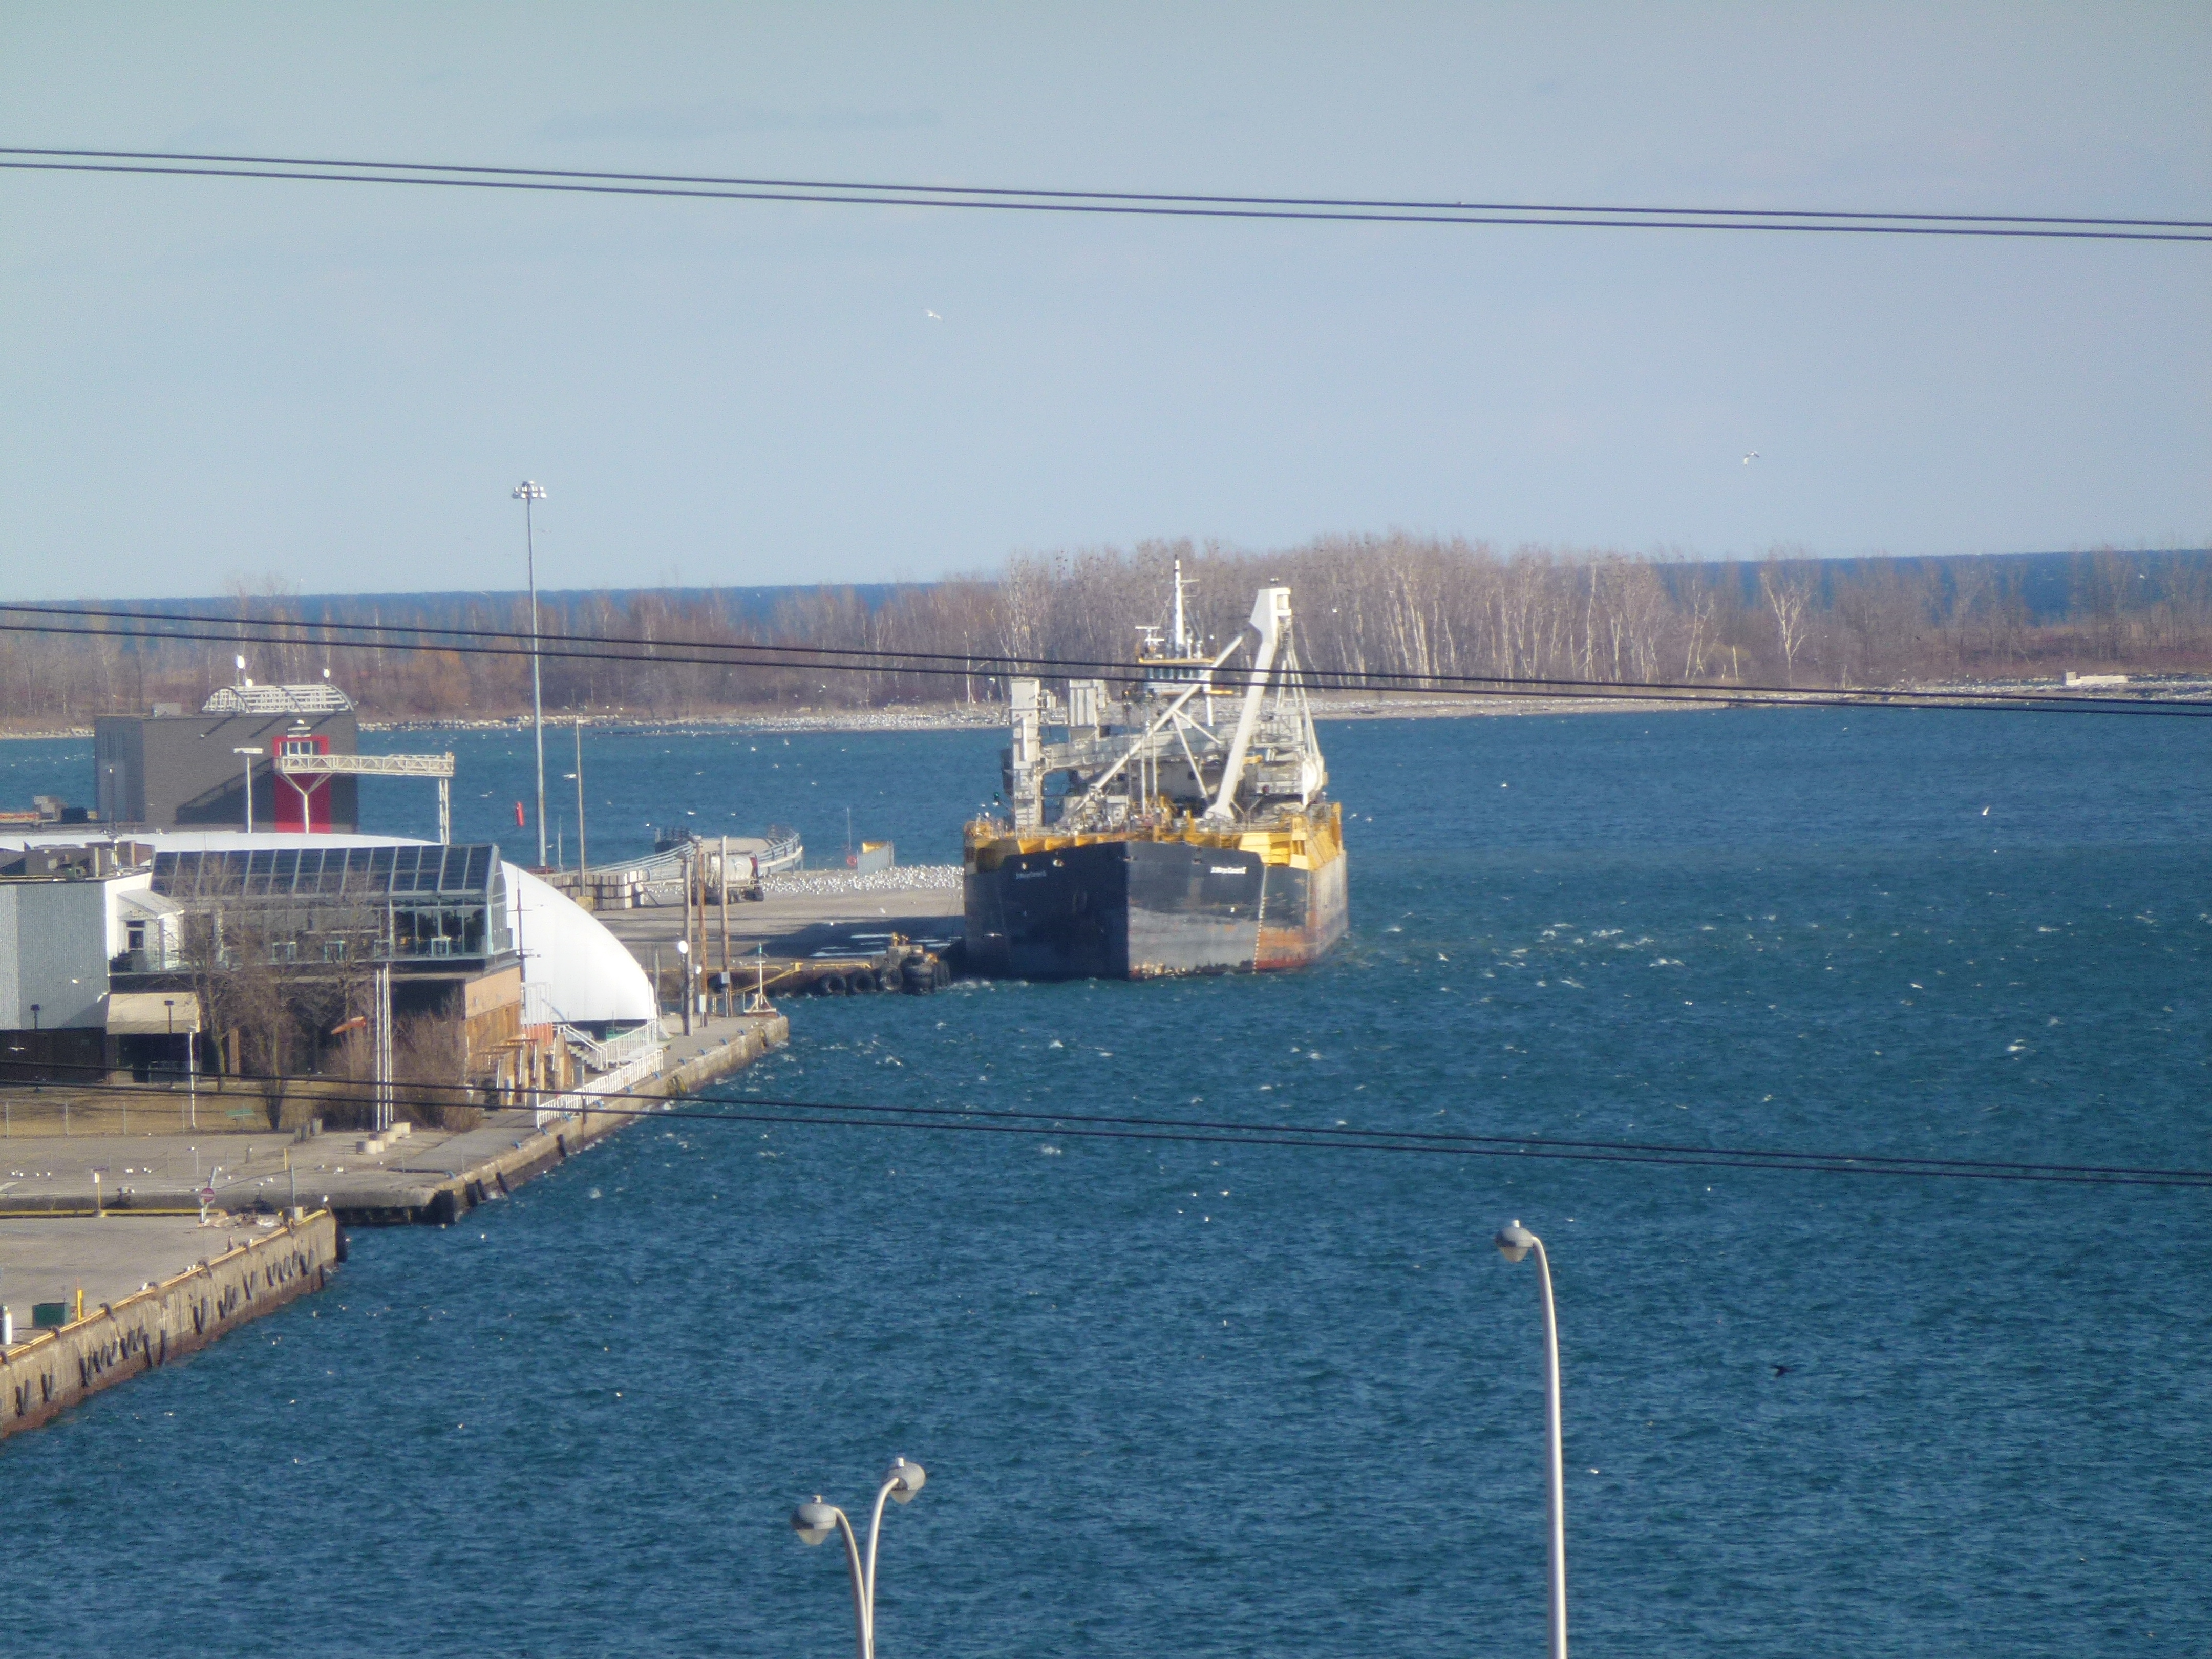 Lake freighter moored in the eastern gap, 2013 04 03 -c.jpg photo